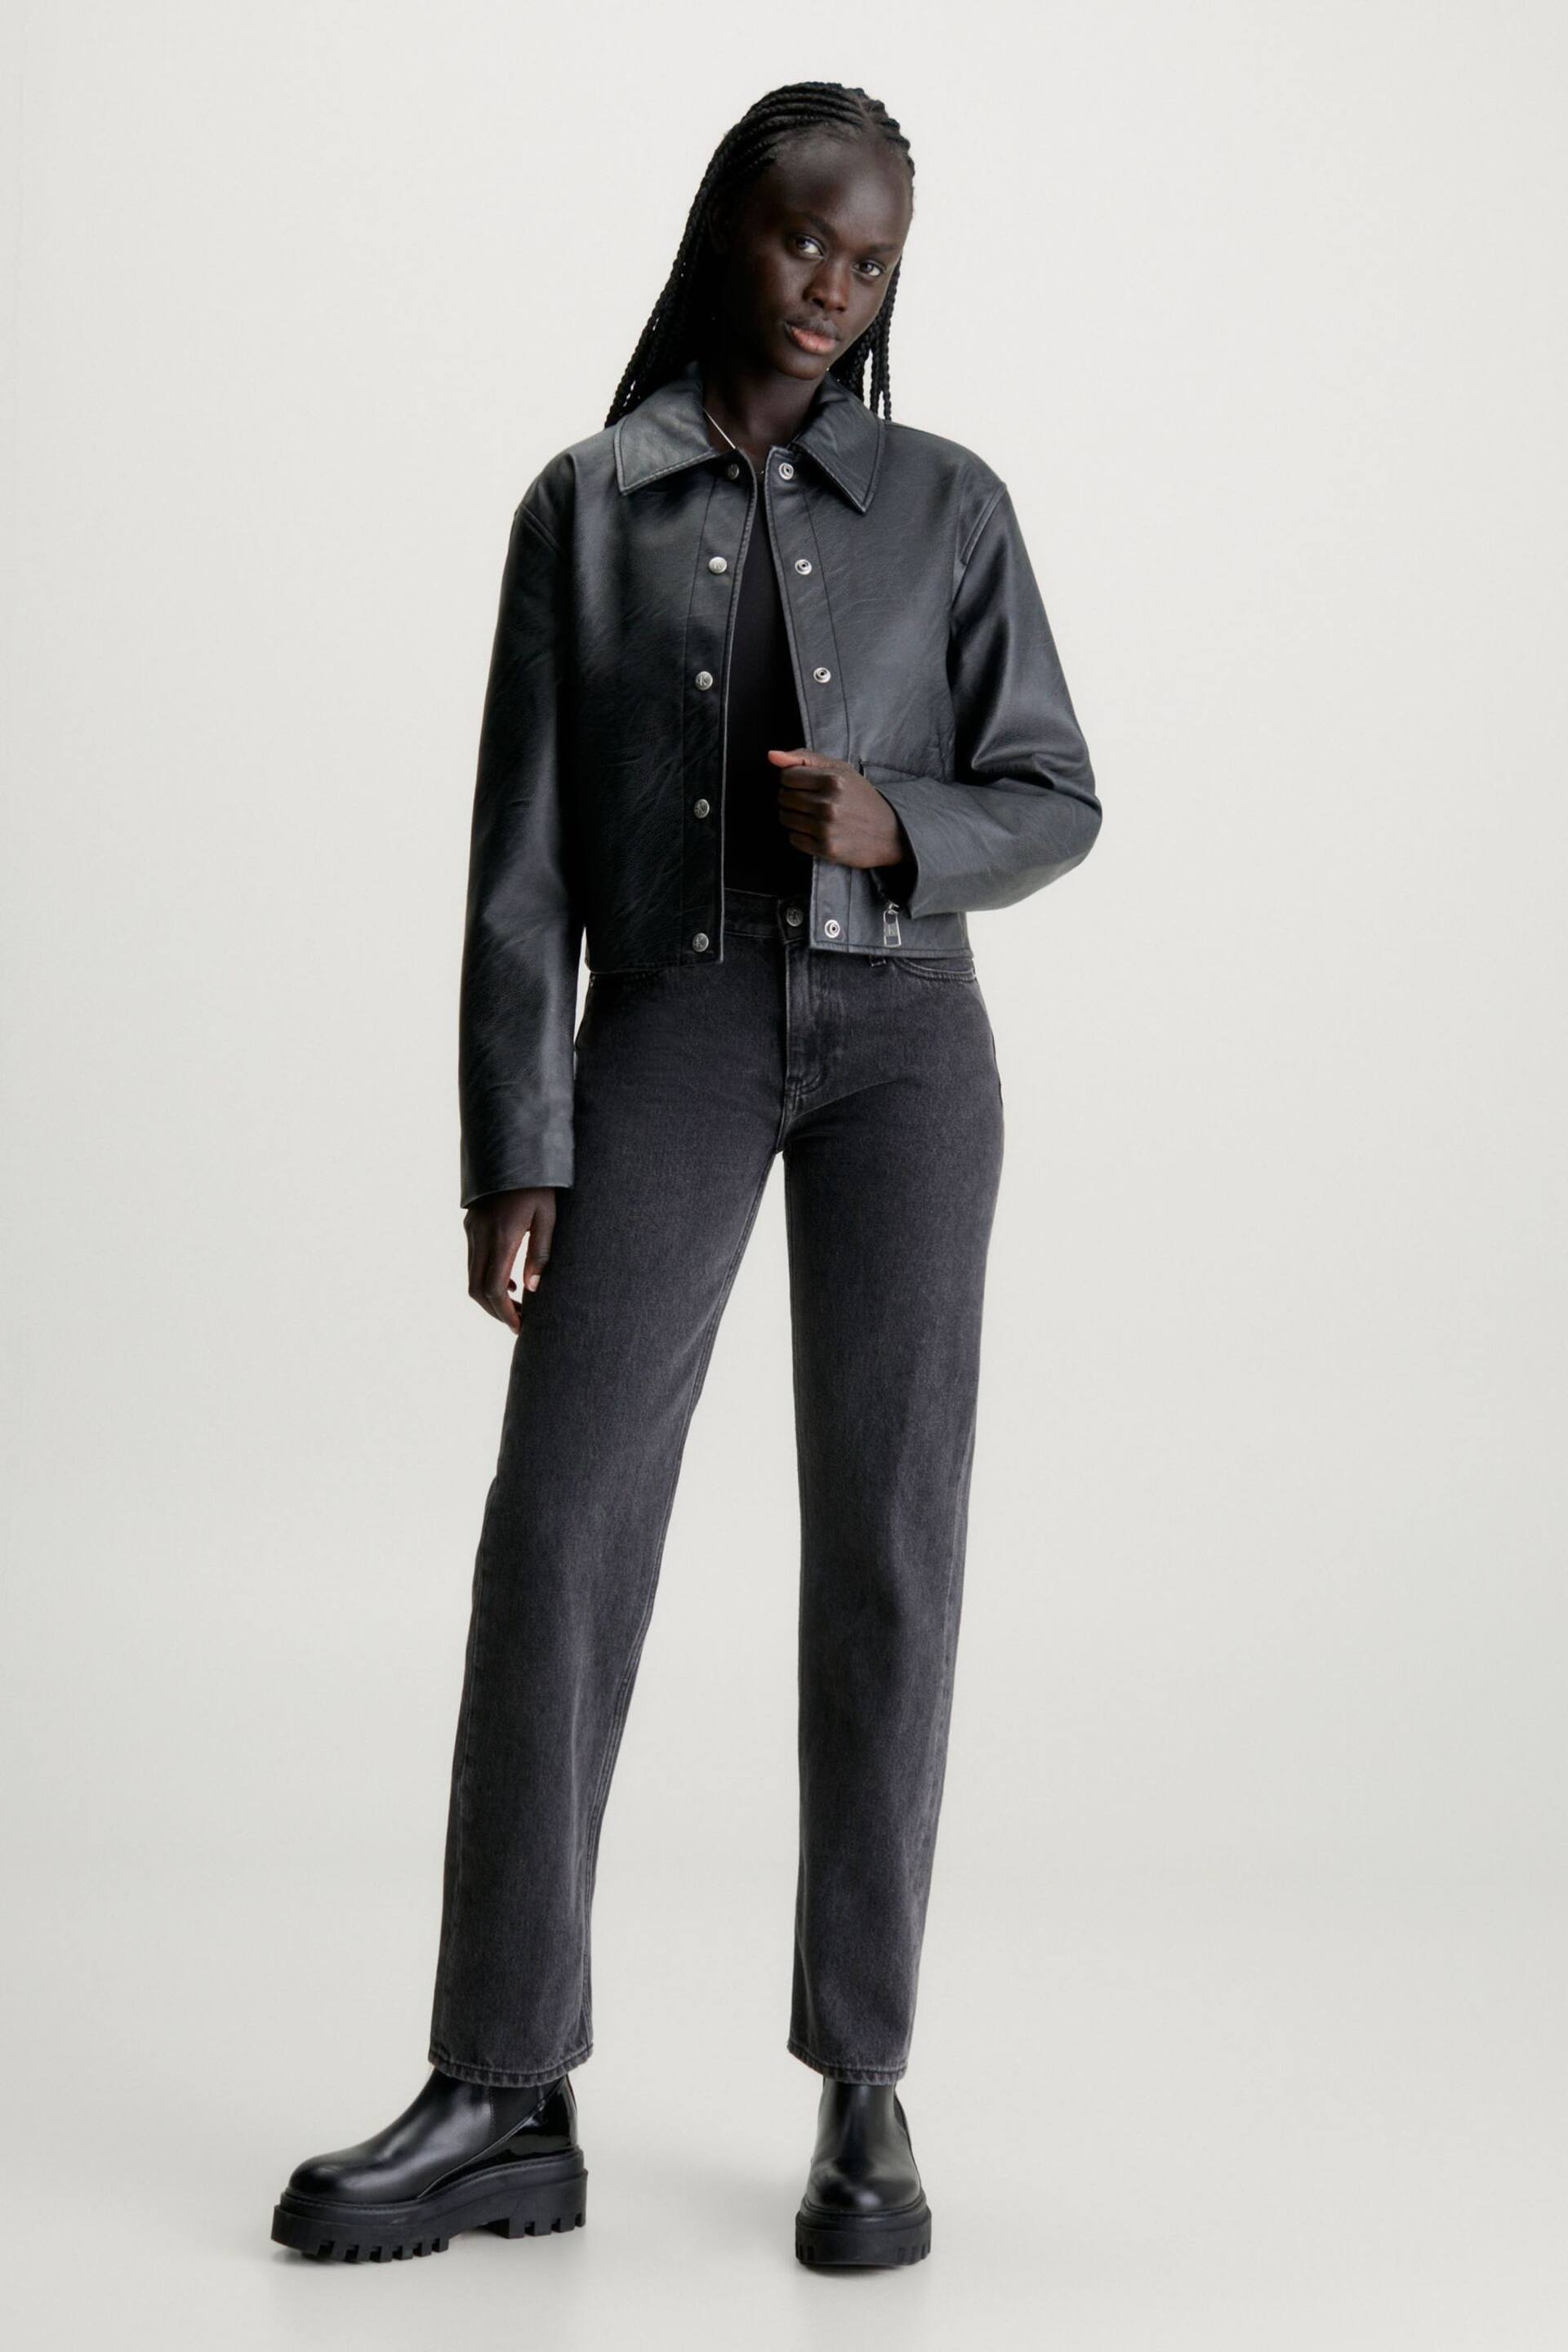 Calvin Klein Black Faux Leather Jacket - Image 3 of 6